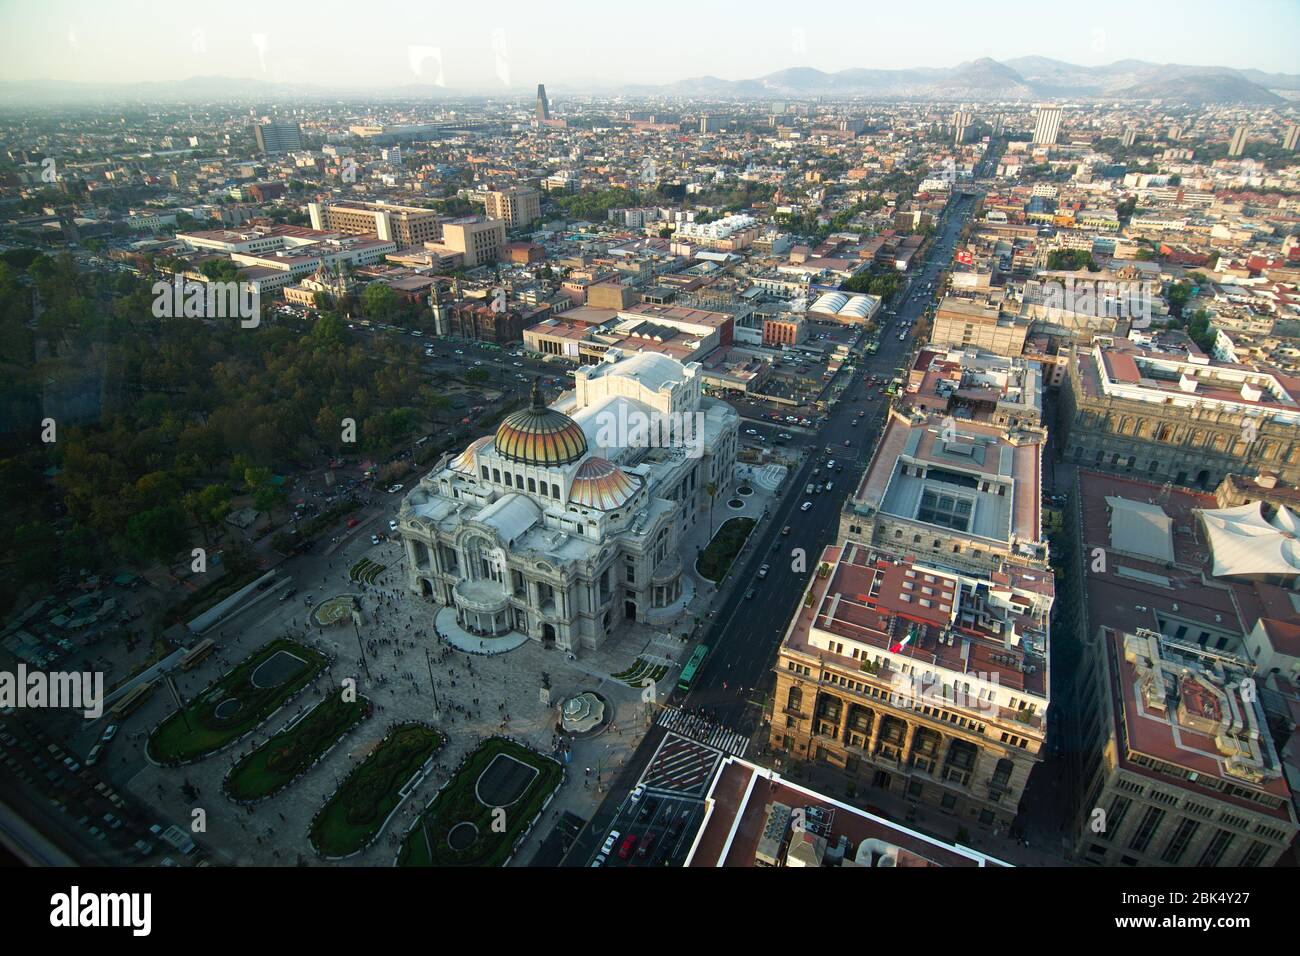 Mexico City, CDMX, Mexico - 2019: The Palacio de Bellas Artes (Palace of Fine Arts) and Alameda Central park as seen from the Torre Latinoamericana. Stock Photo